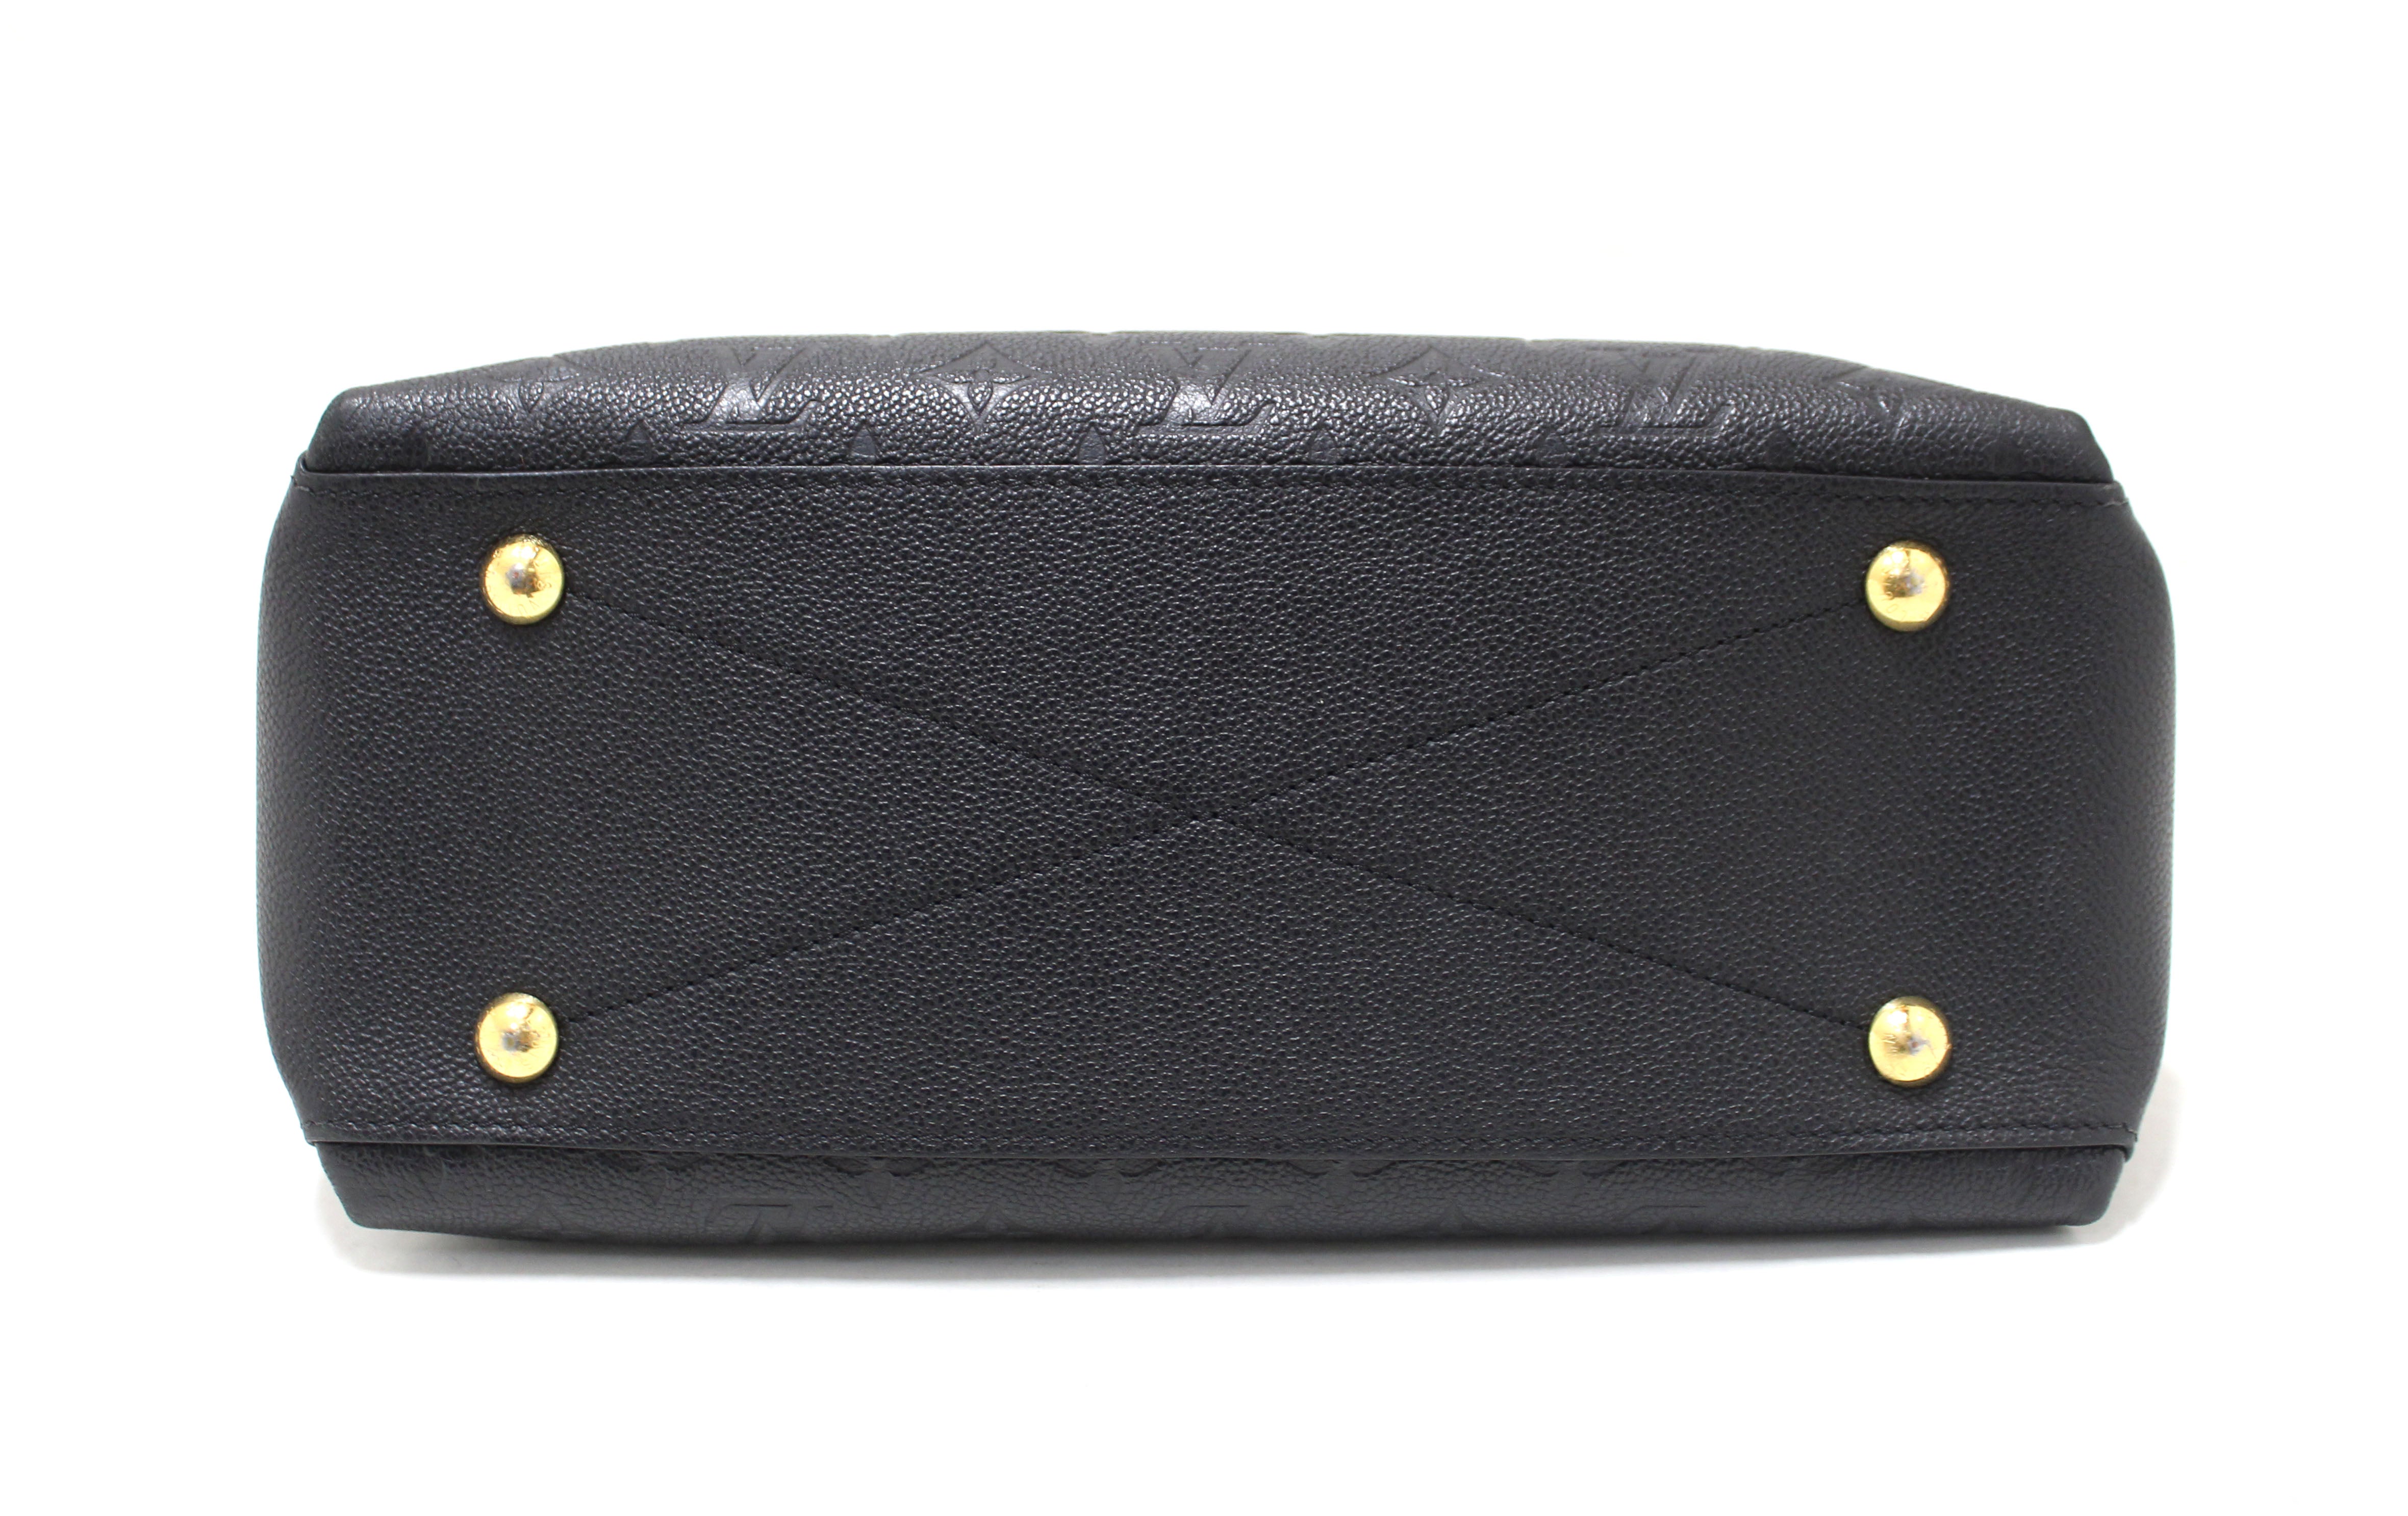 Louis Vuitton Georges Handbag Monogram Empreinte Leather BB Black 119489112